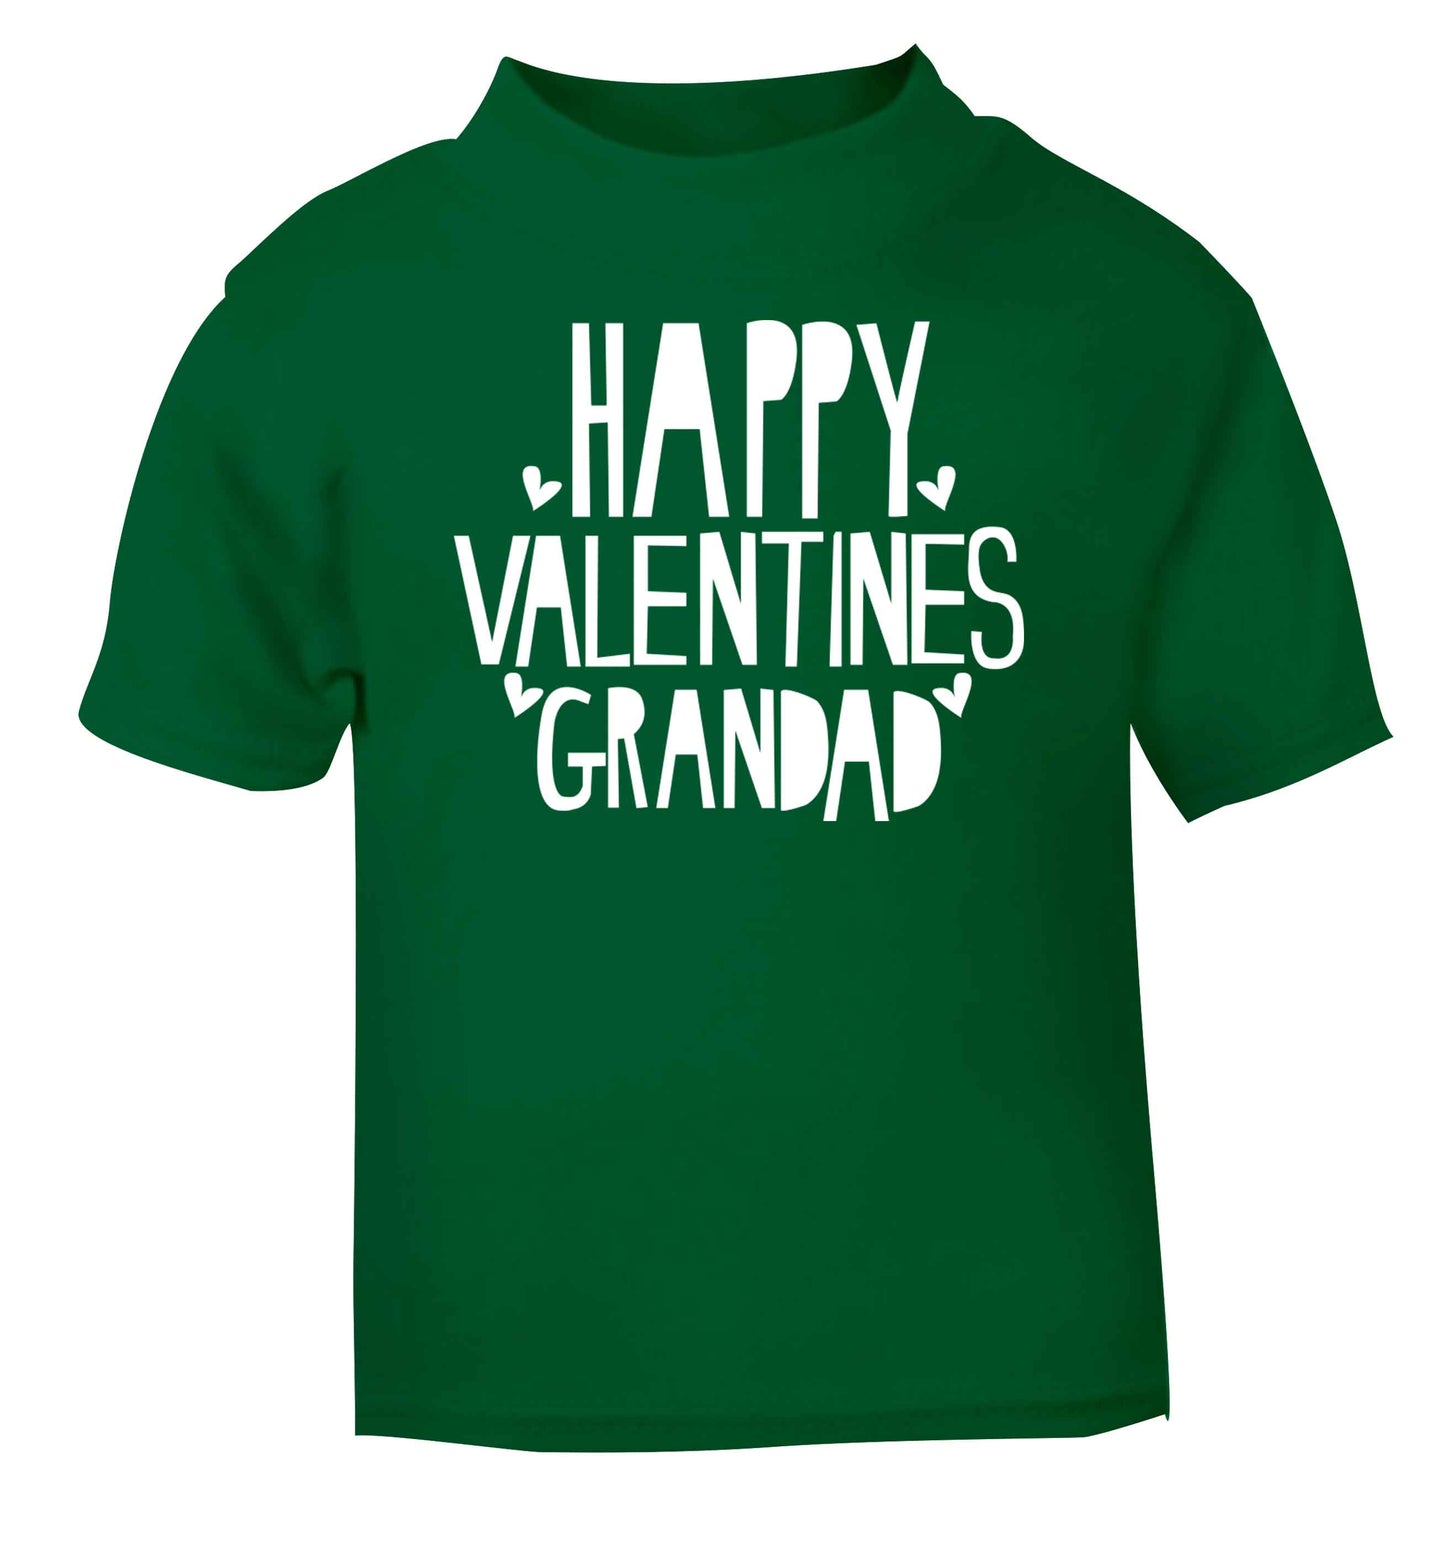 Happy valentines grandad green baby toddler Tshirt 2 Years